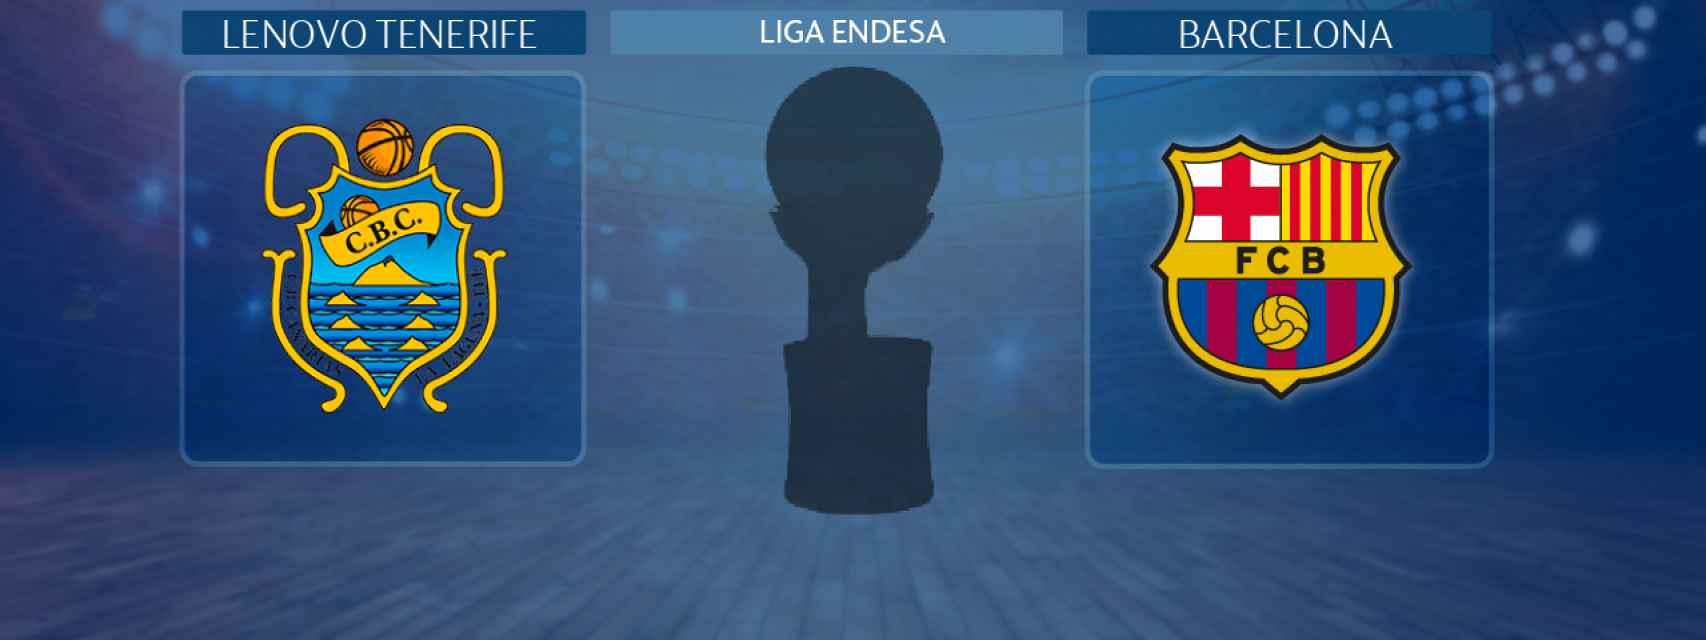 Lenovo Tenerife - Barcelona, semifinal de la Liga Endesa